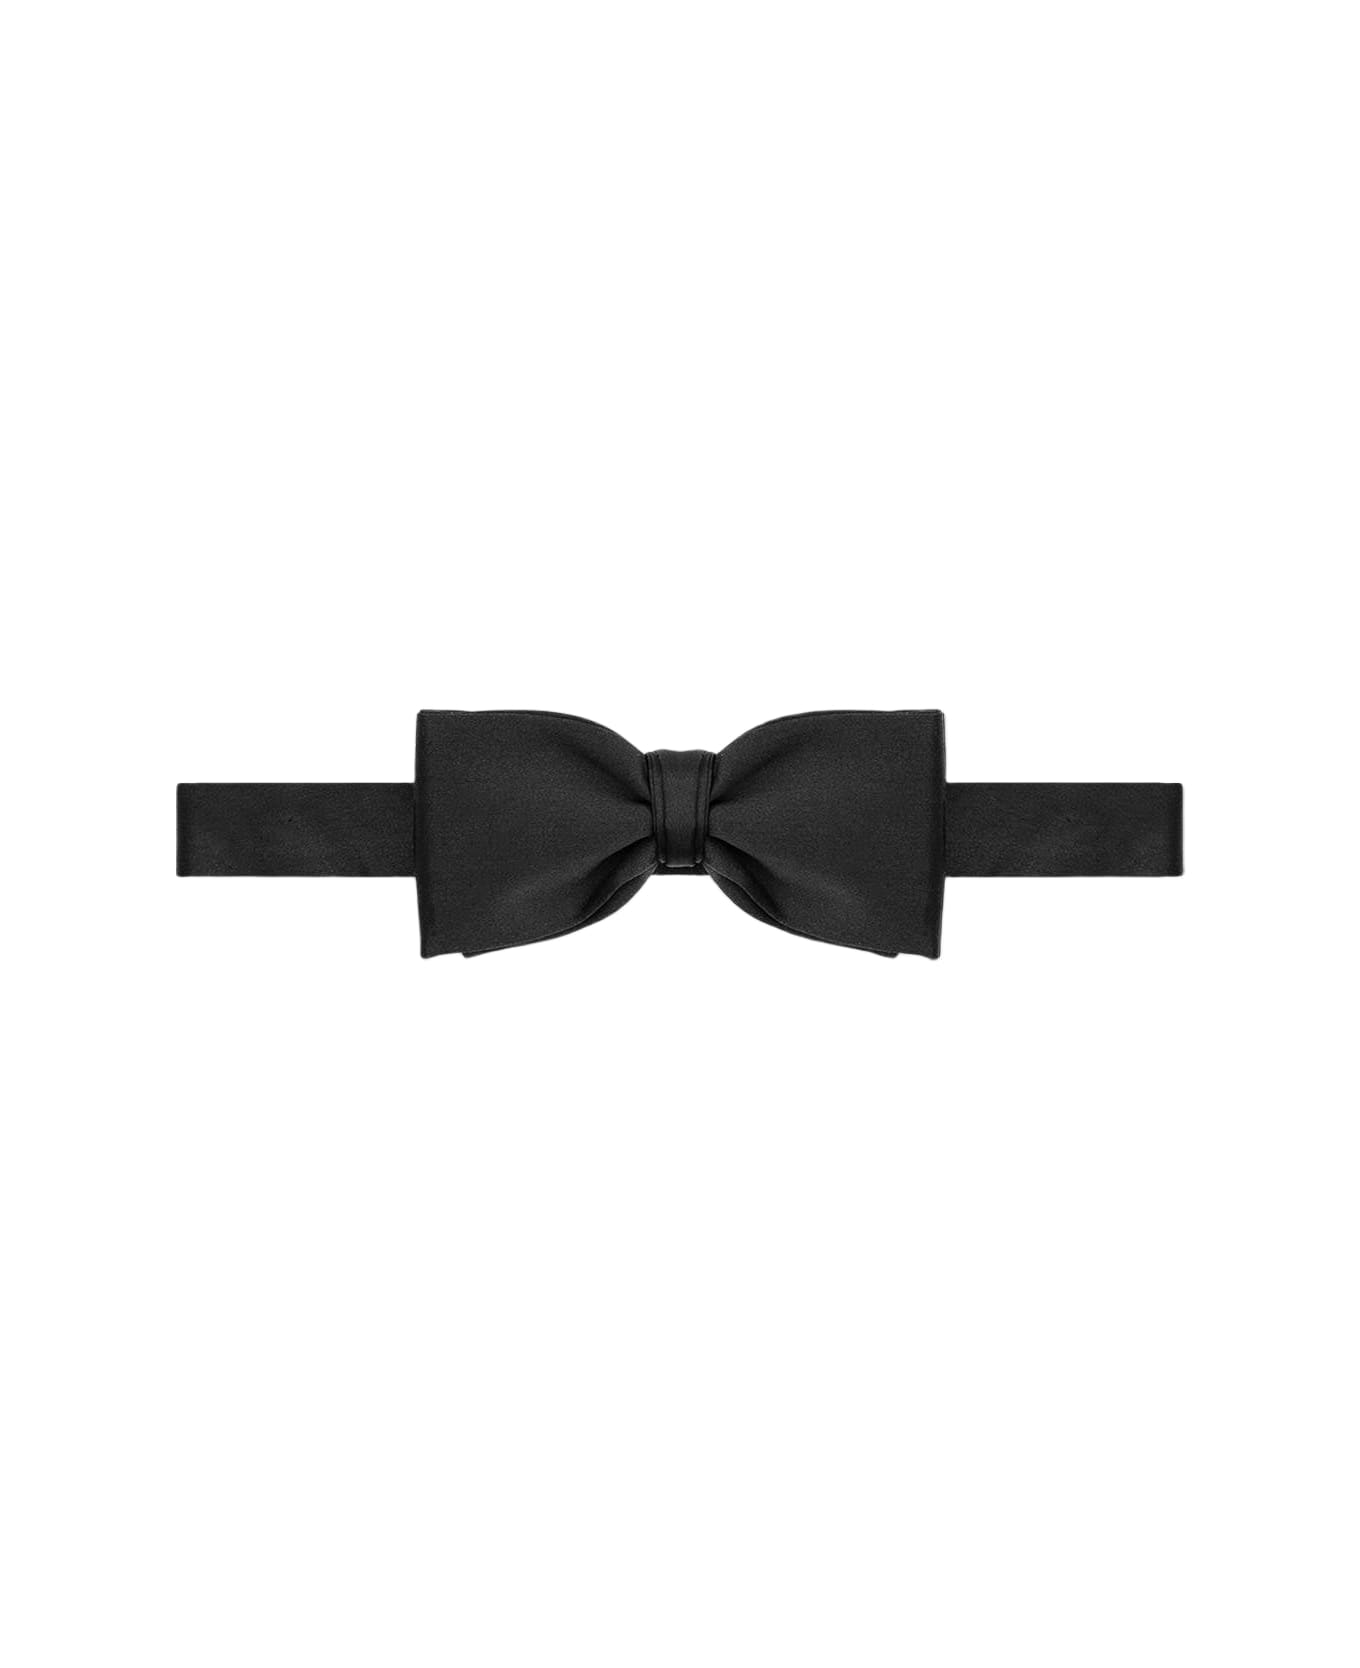 Larusmiani Bow Tie For Tuxedo Tie - Black ネクタイ